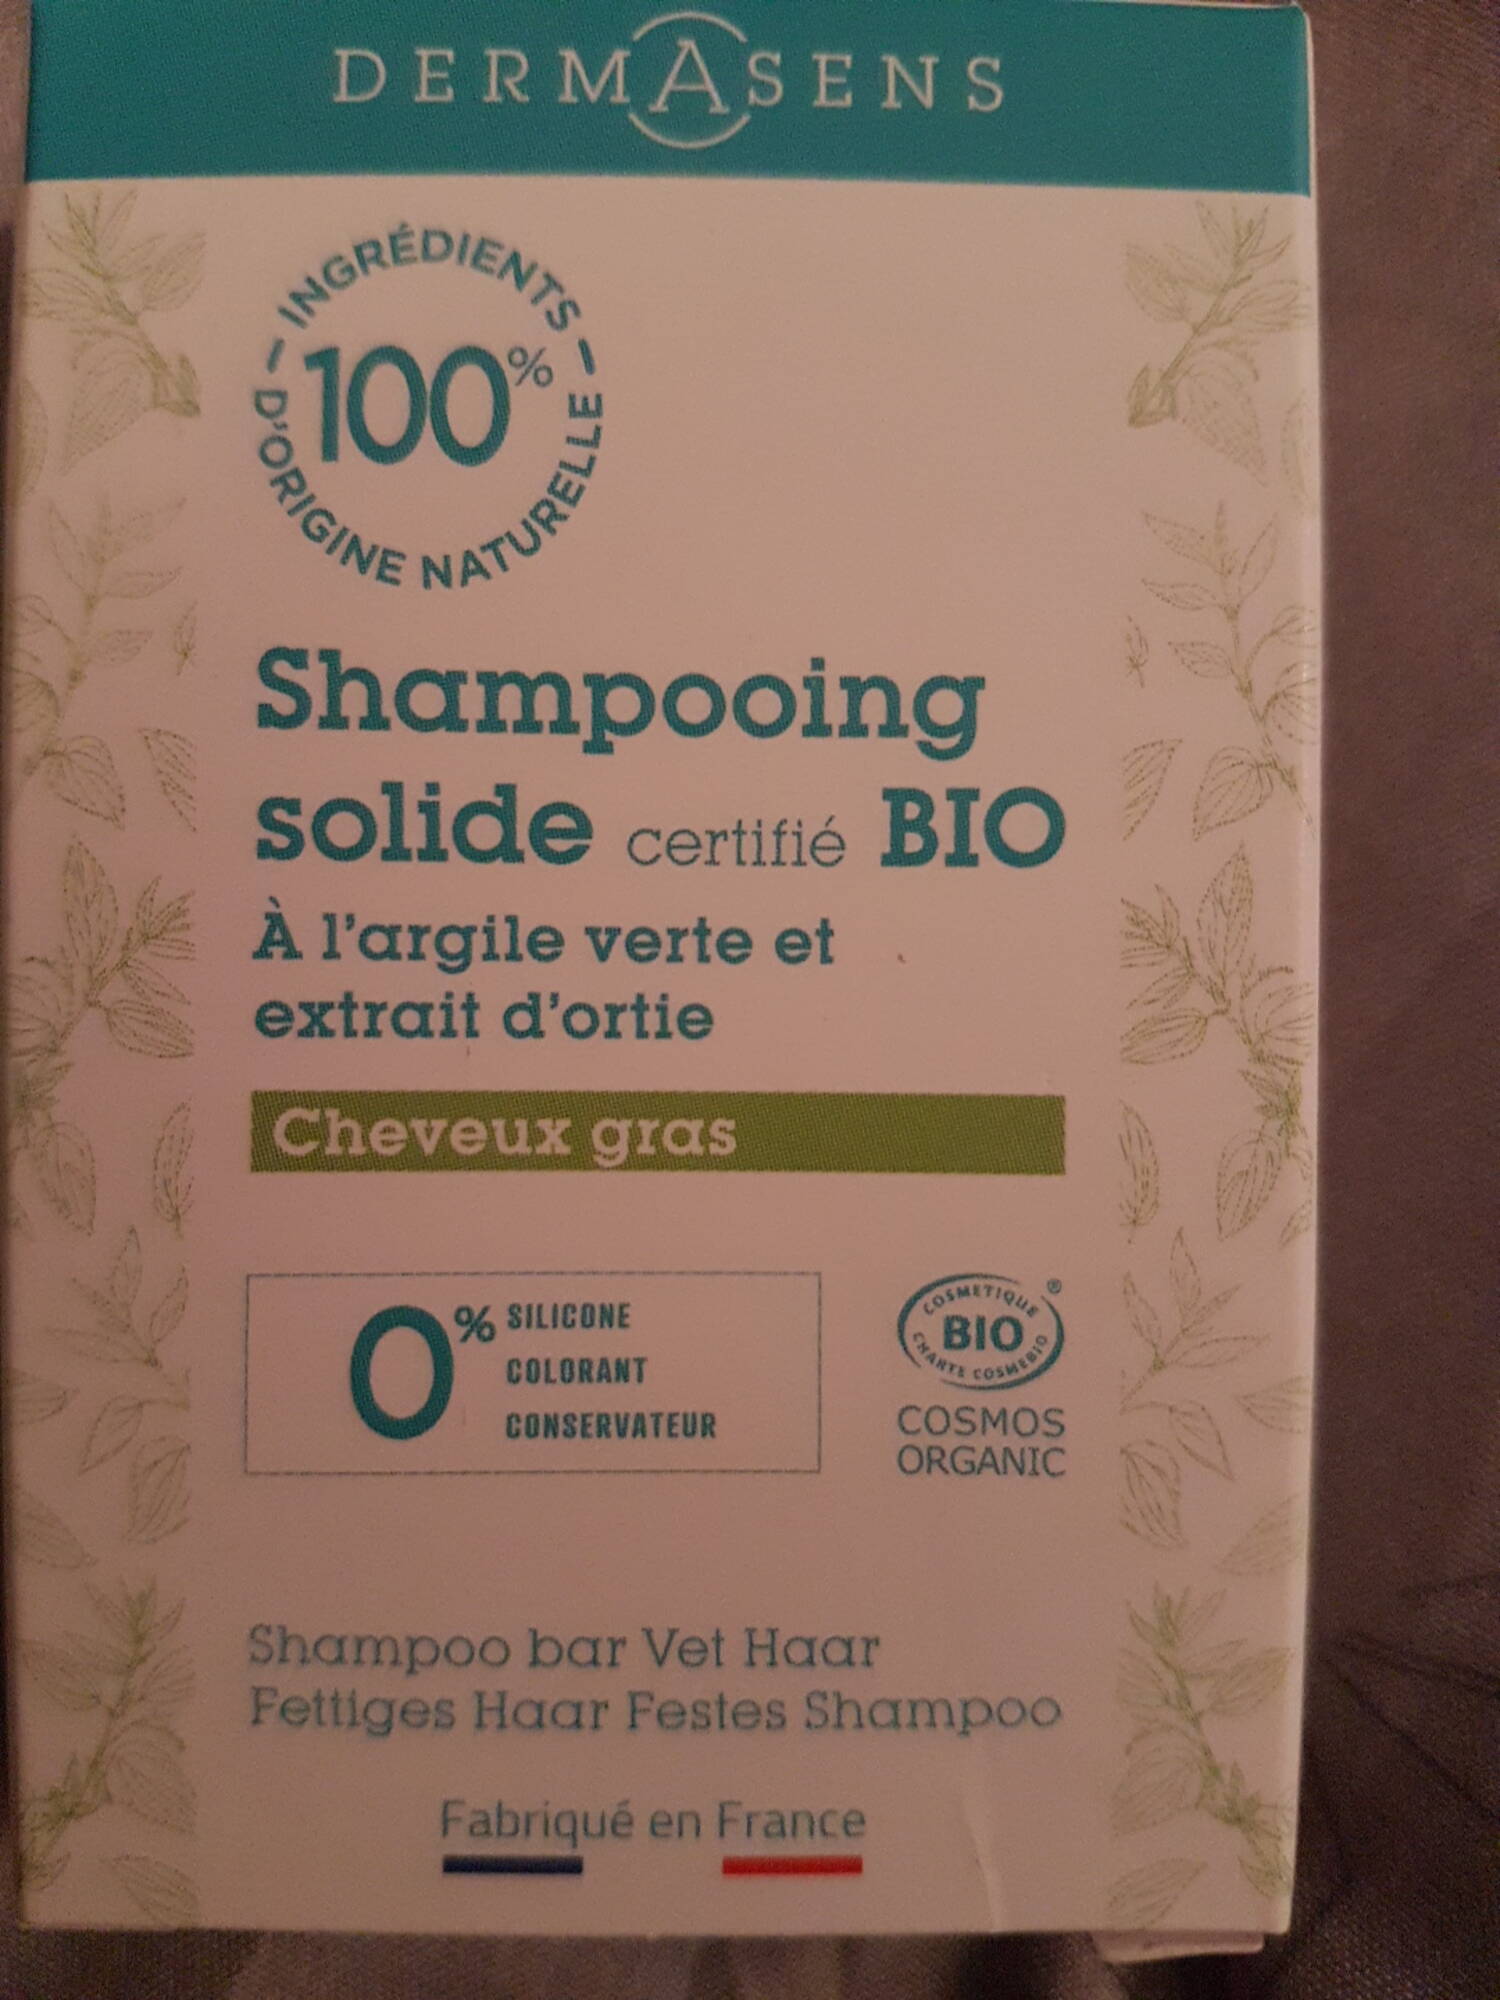 DERMASENS - Shampooing solide certifié bio 